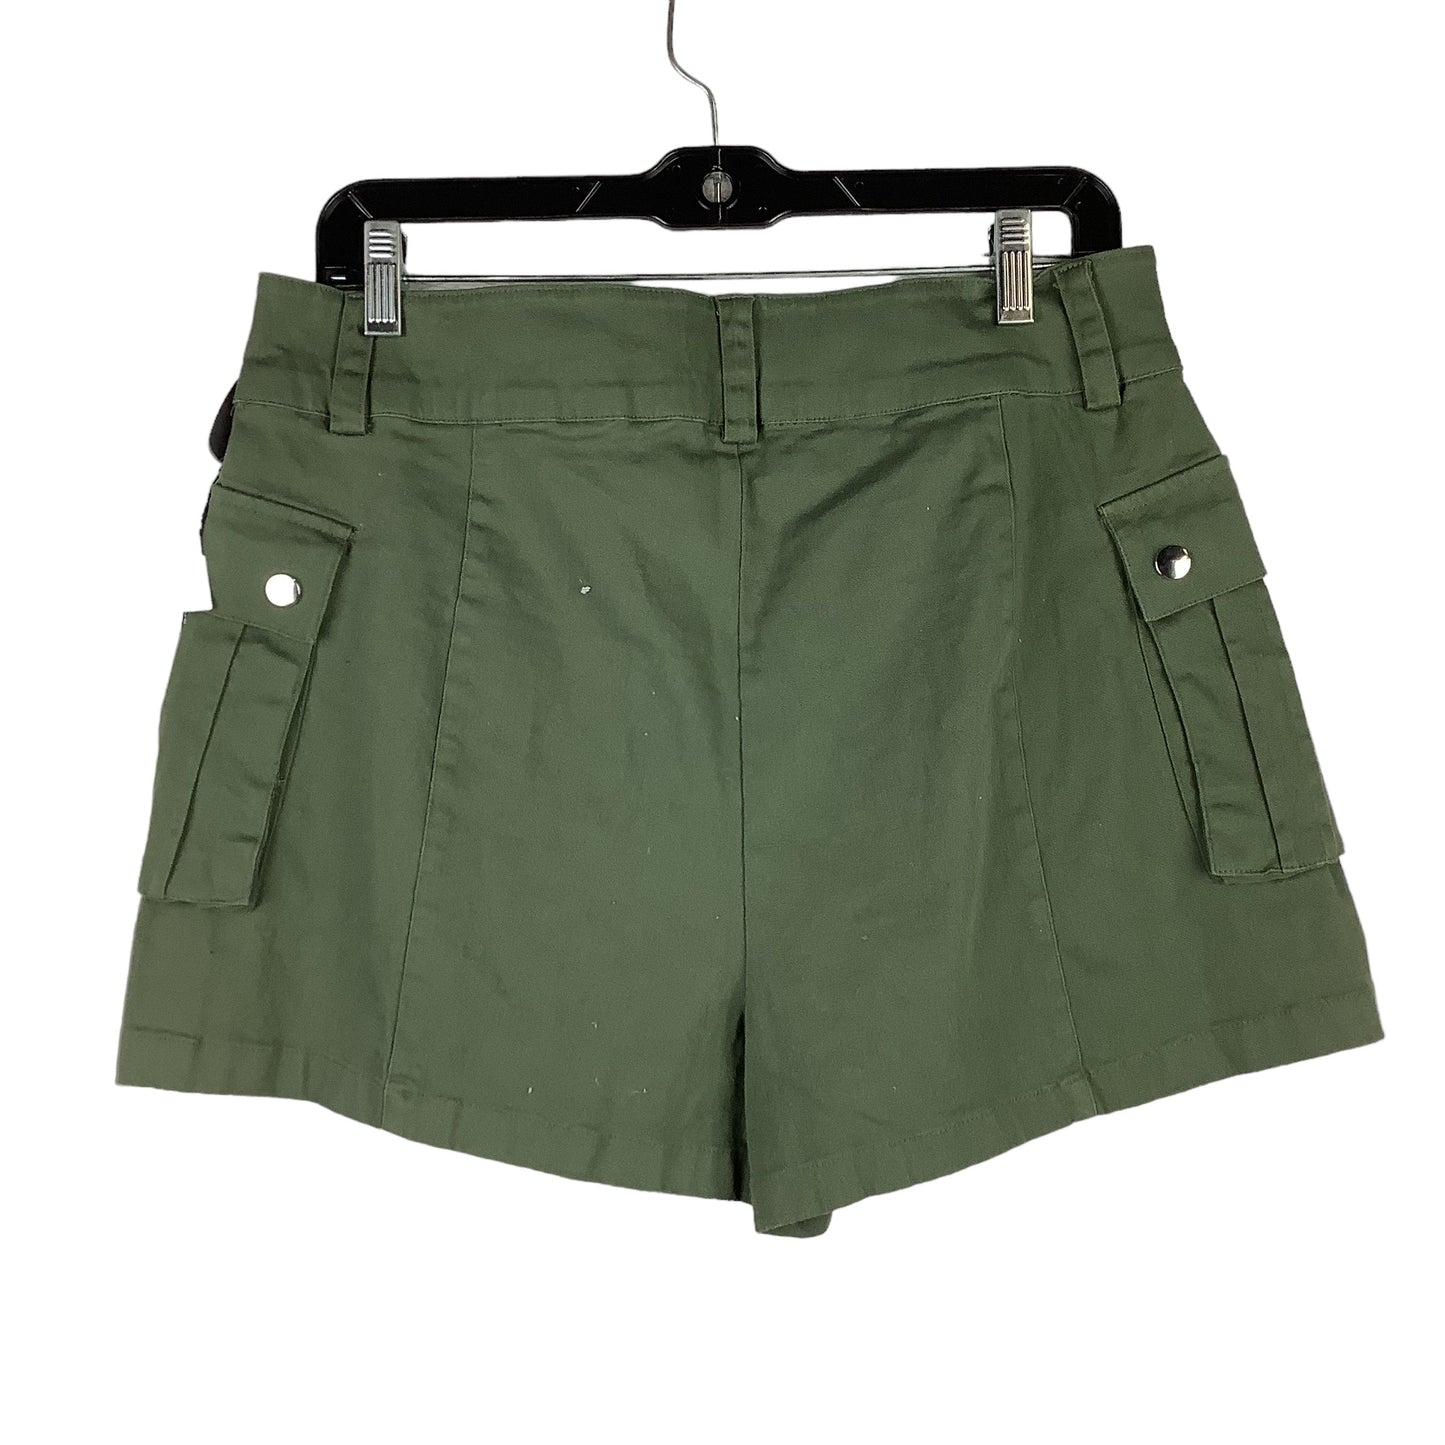 Shorts By Cmc  Size: Xl